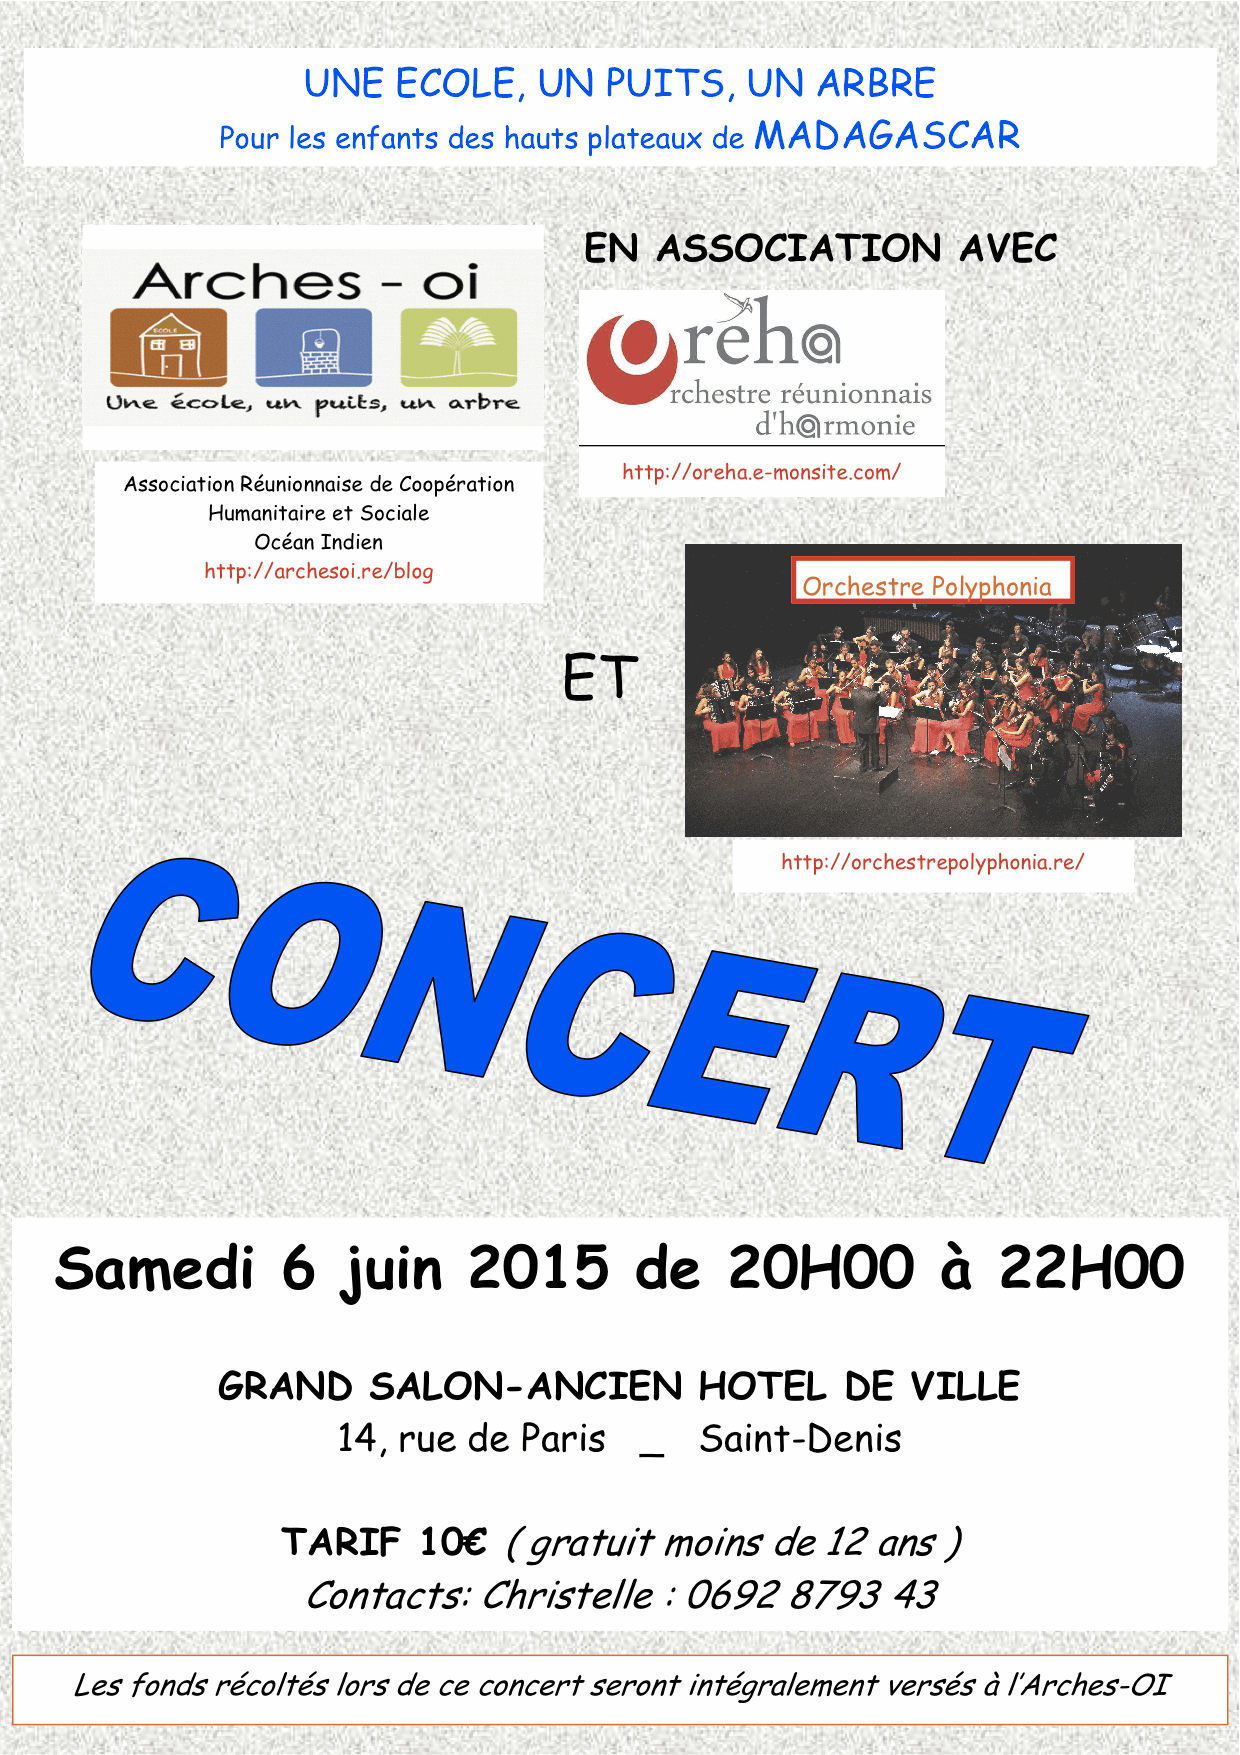 ARCHES-OI<br>Un concert de solidarité samedi 6 juin